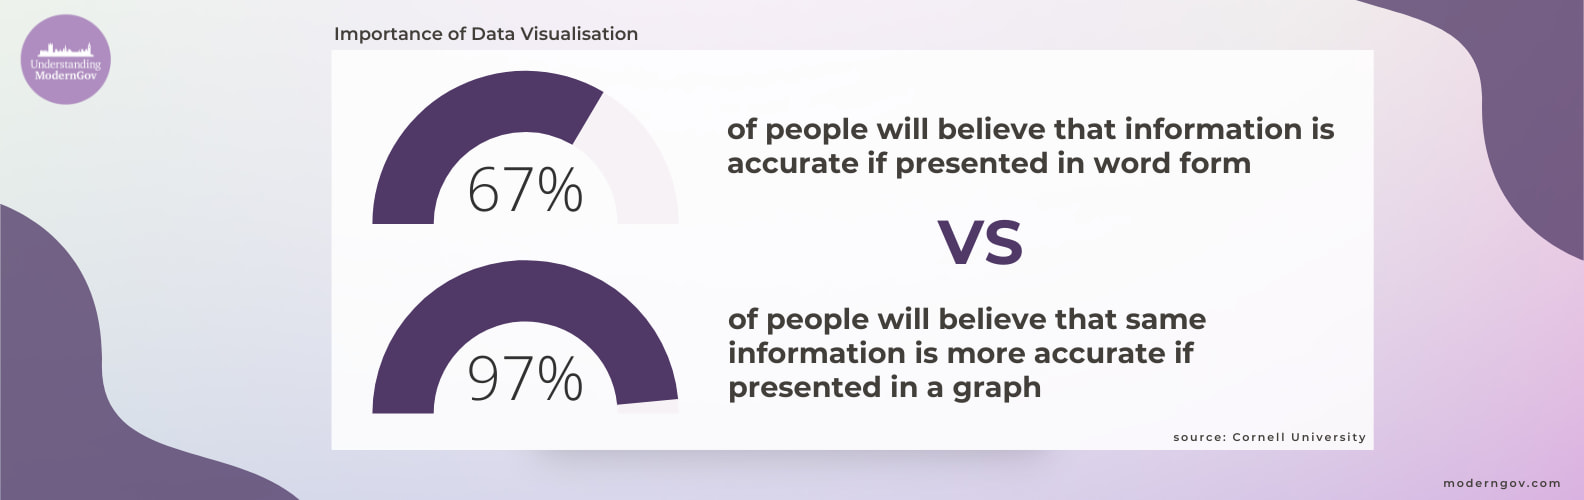 data presentation in word form vs graphics